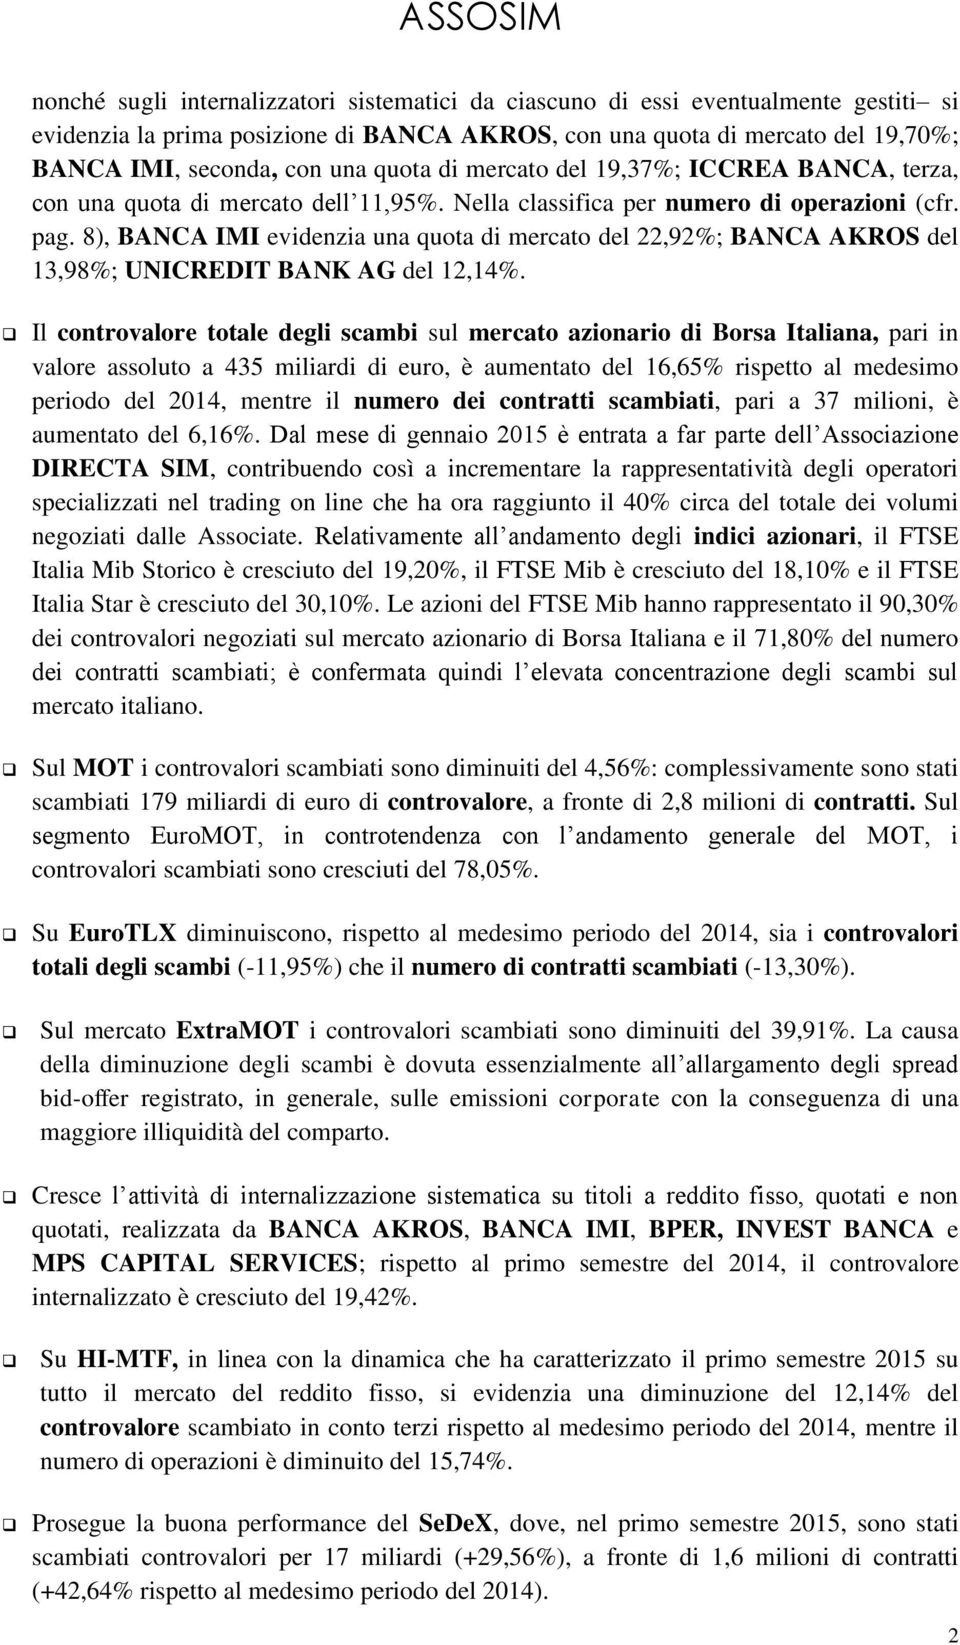 8), BANCA IMI evidenzia una quota di mercato del 22,92%; BANCA AKROS del 13,98%; UNICREDIT BANK AG del 12,14%.